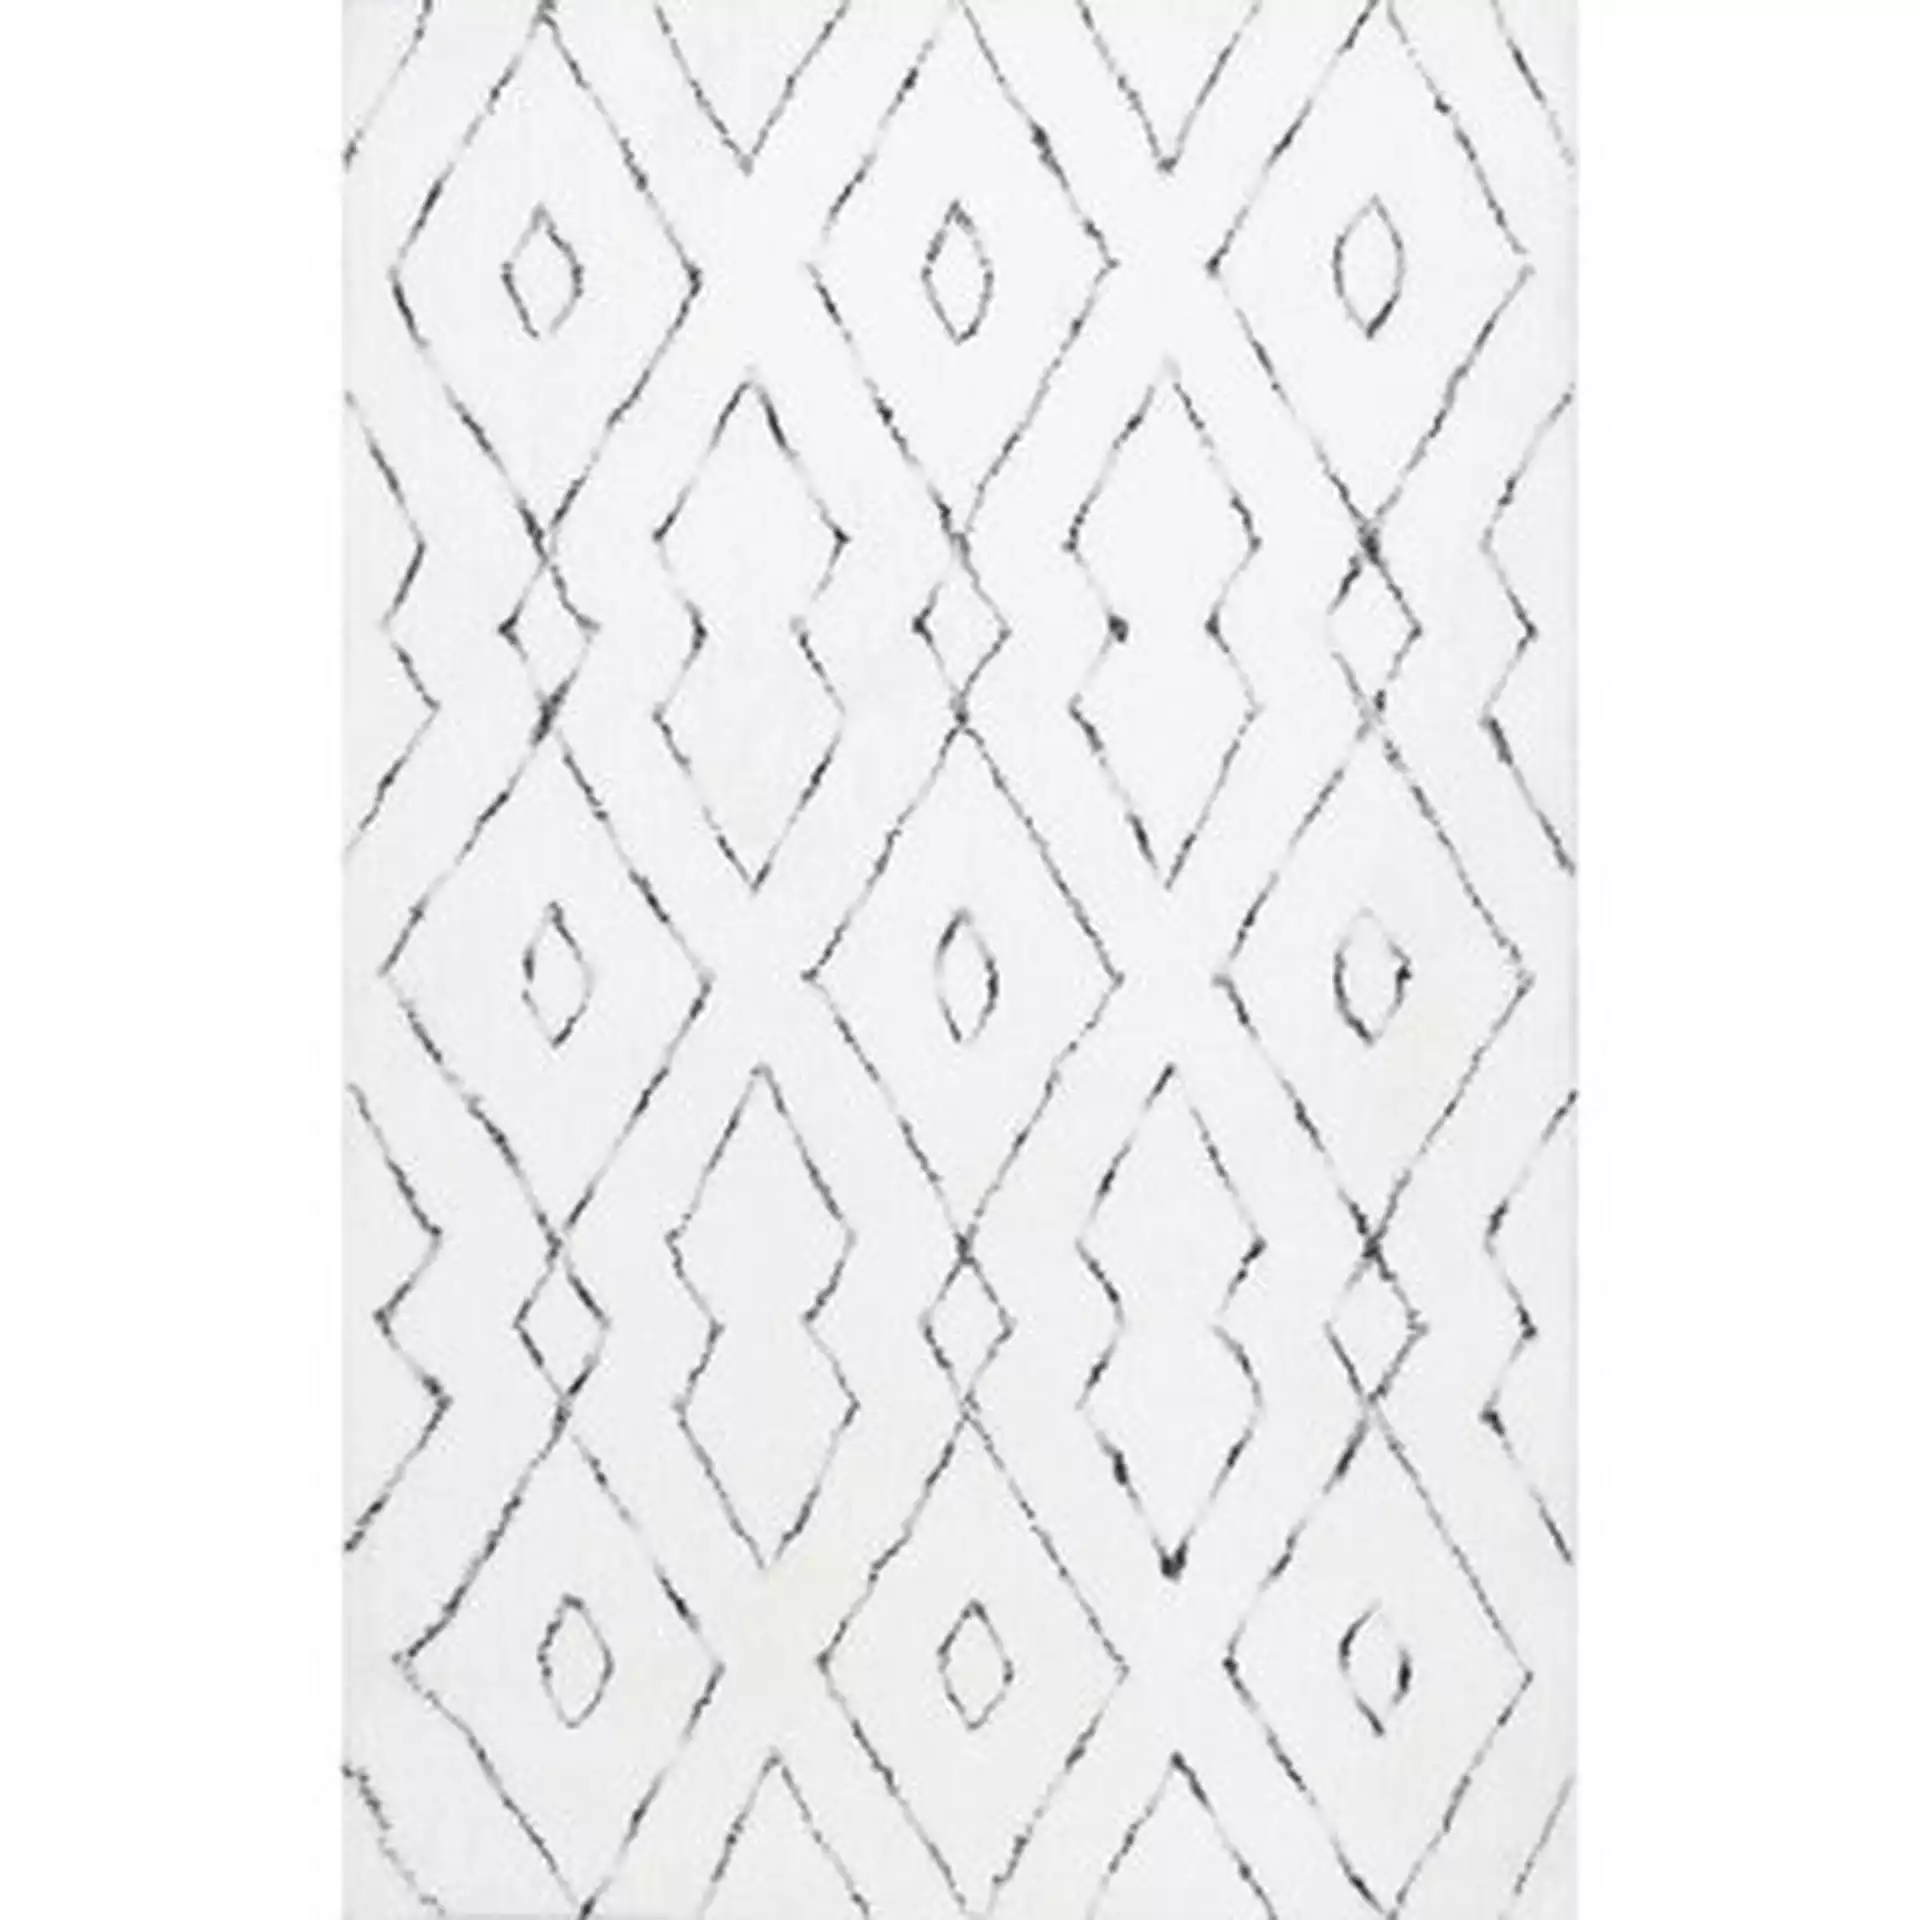 Peraza Hand-Tufted White Area Rug, 7'6" x 9'6"